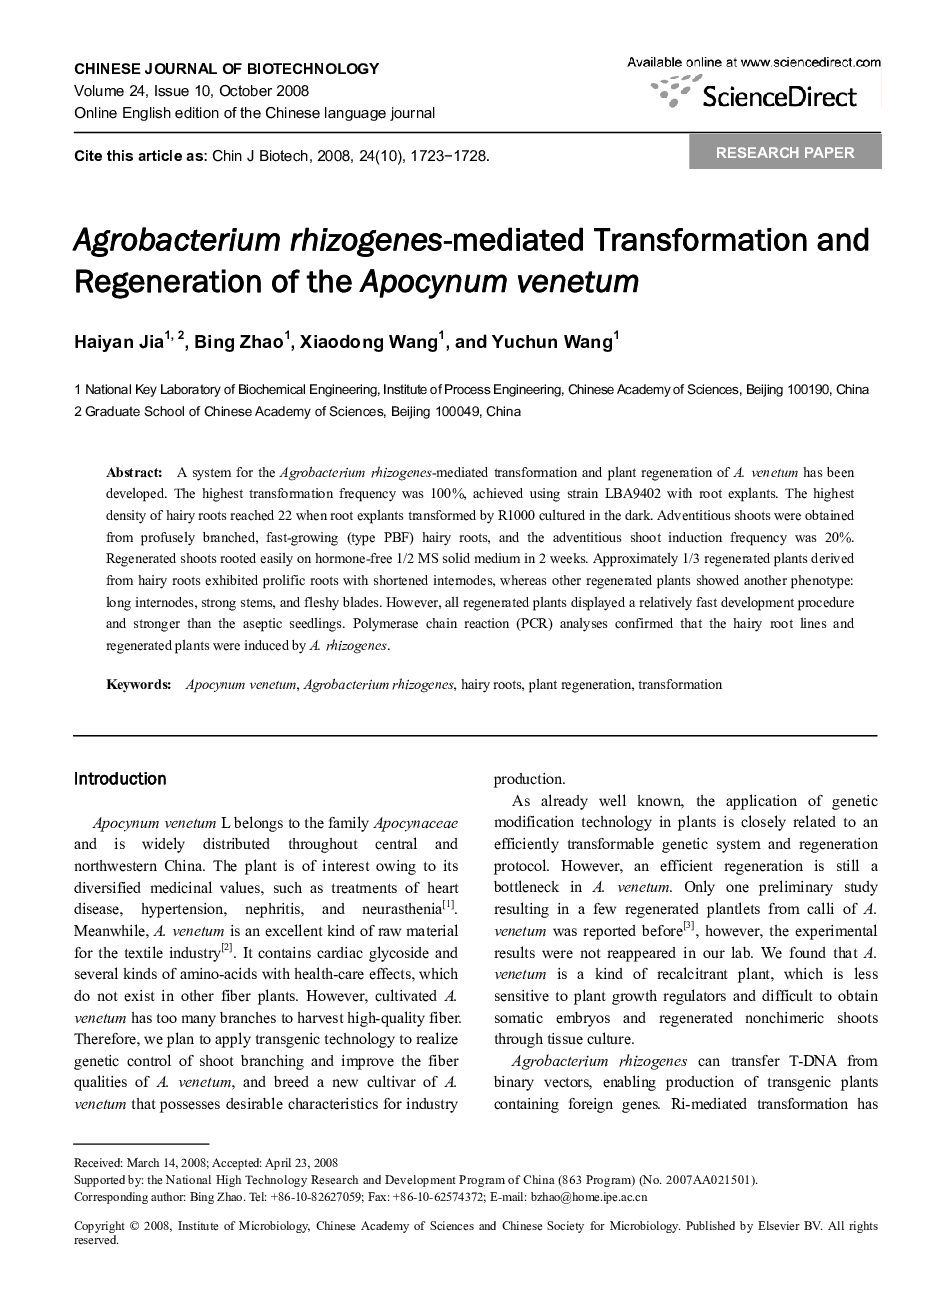 Agrobacterium rhizogenes-mediated Transformation and Regeneration of the Apocynum venetum